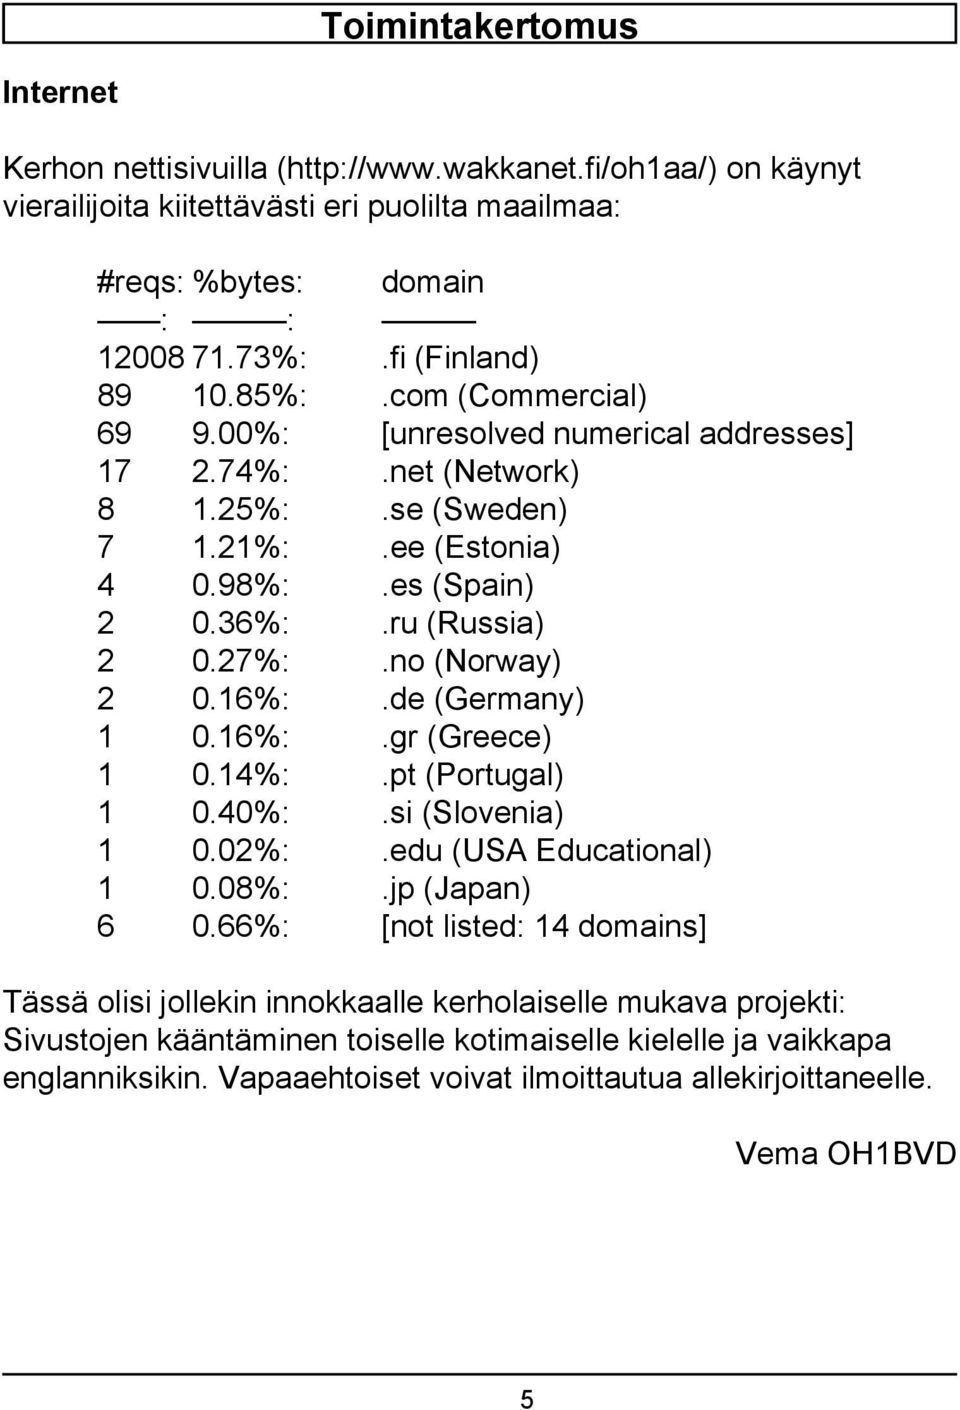 27%:.no (Norway) 2 0.16%:.de (Germany) 1 0.16%:.gr (Greece) 1 0.14%:.pt (Portugal) 1 0.40%:.si (Slovenia) 1 0.02%:.edu (USA Educational) 1 0.08%:.jp (Japan) 6 0.